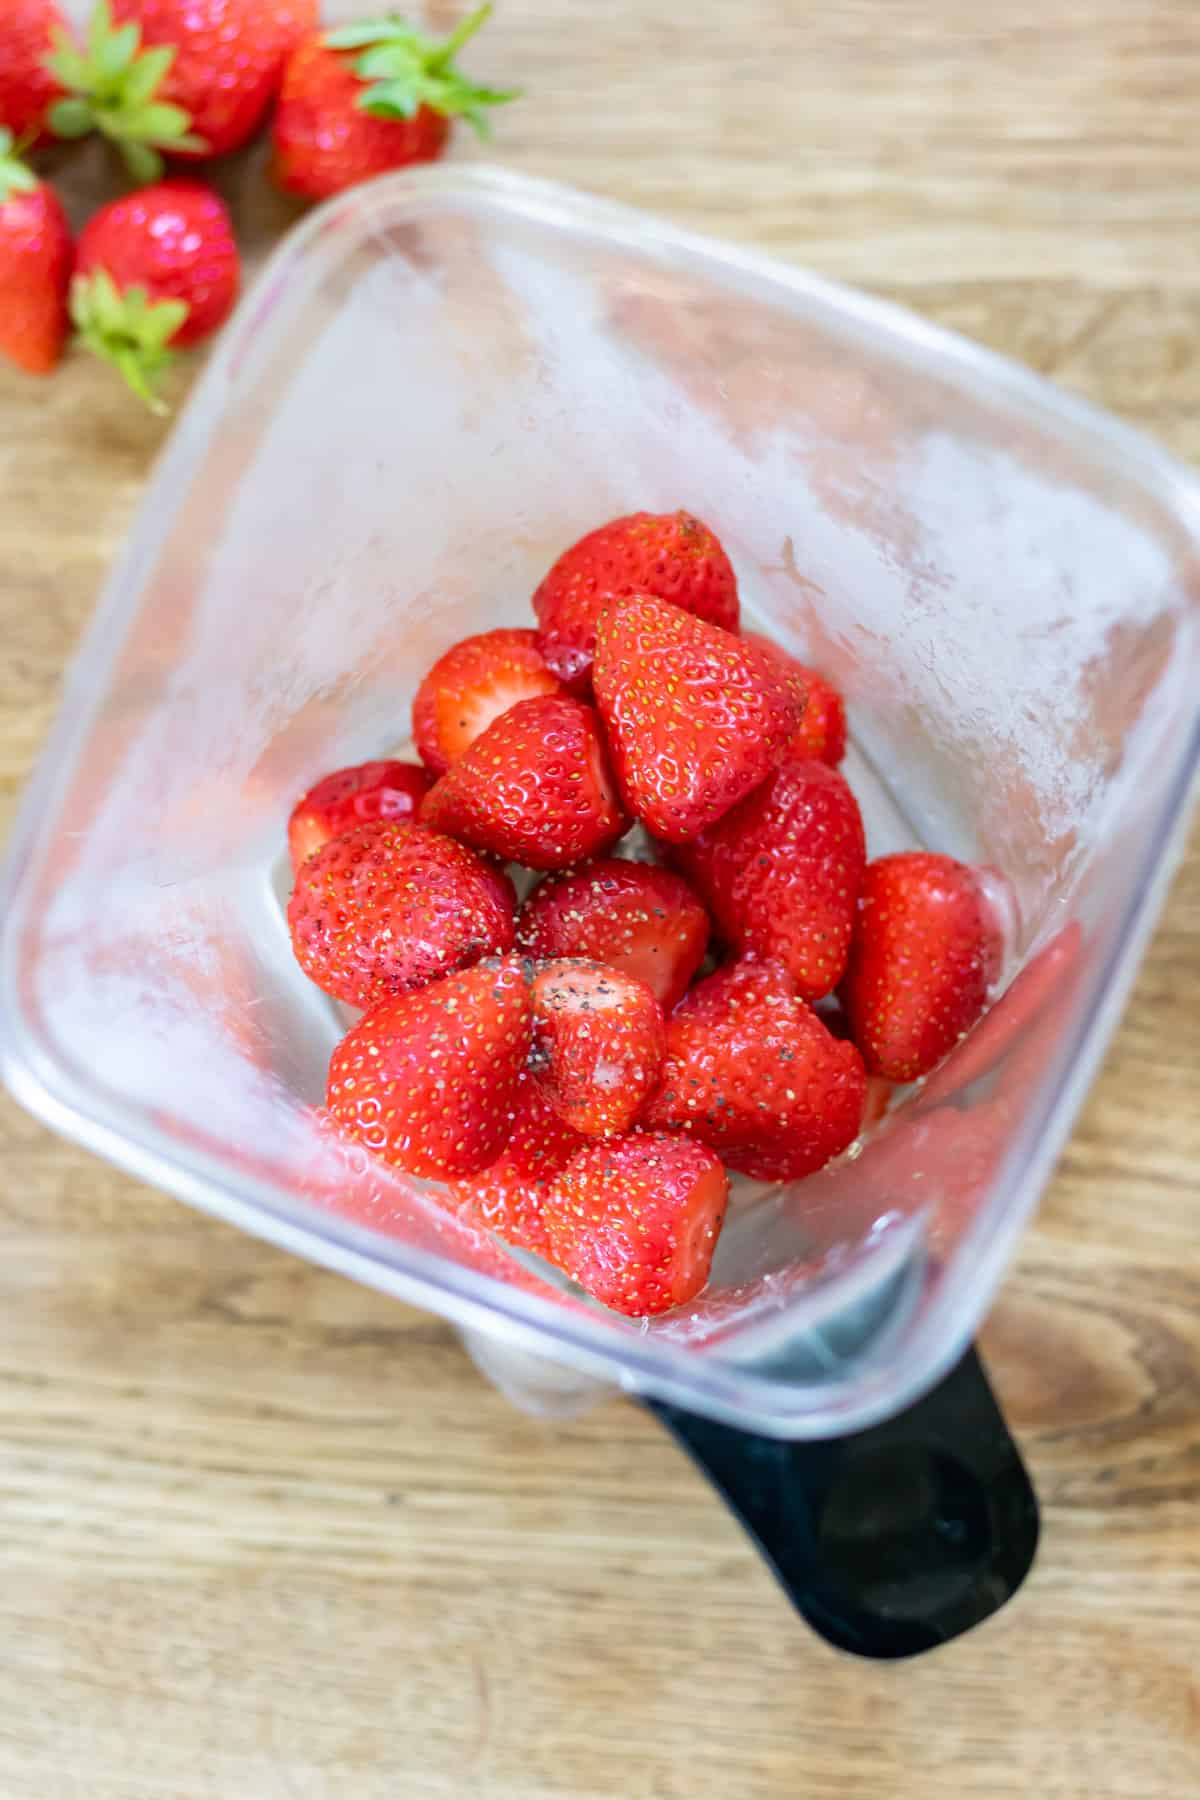 Strawberries in a blender.